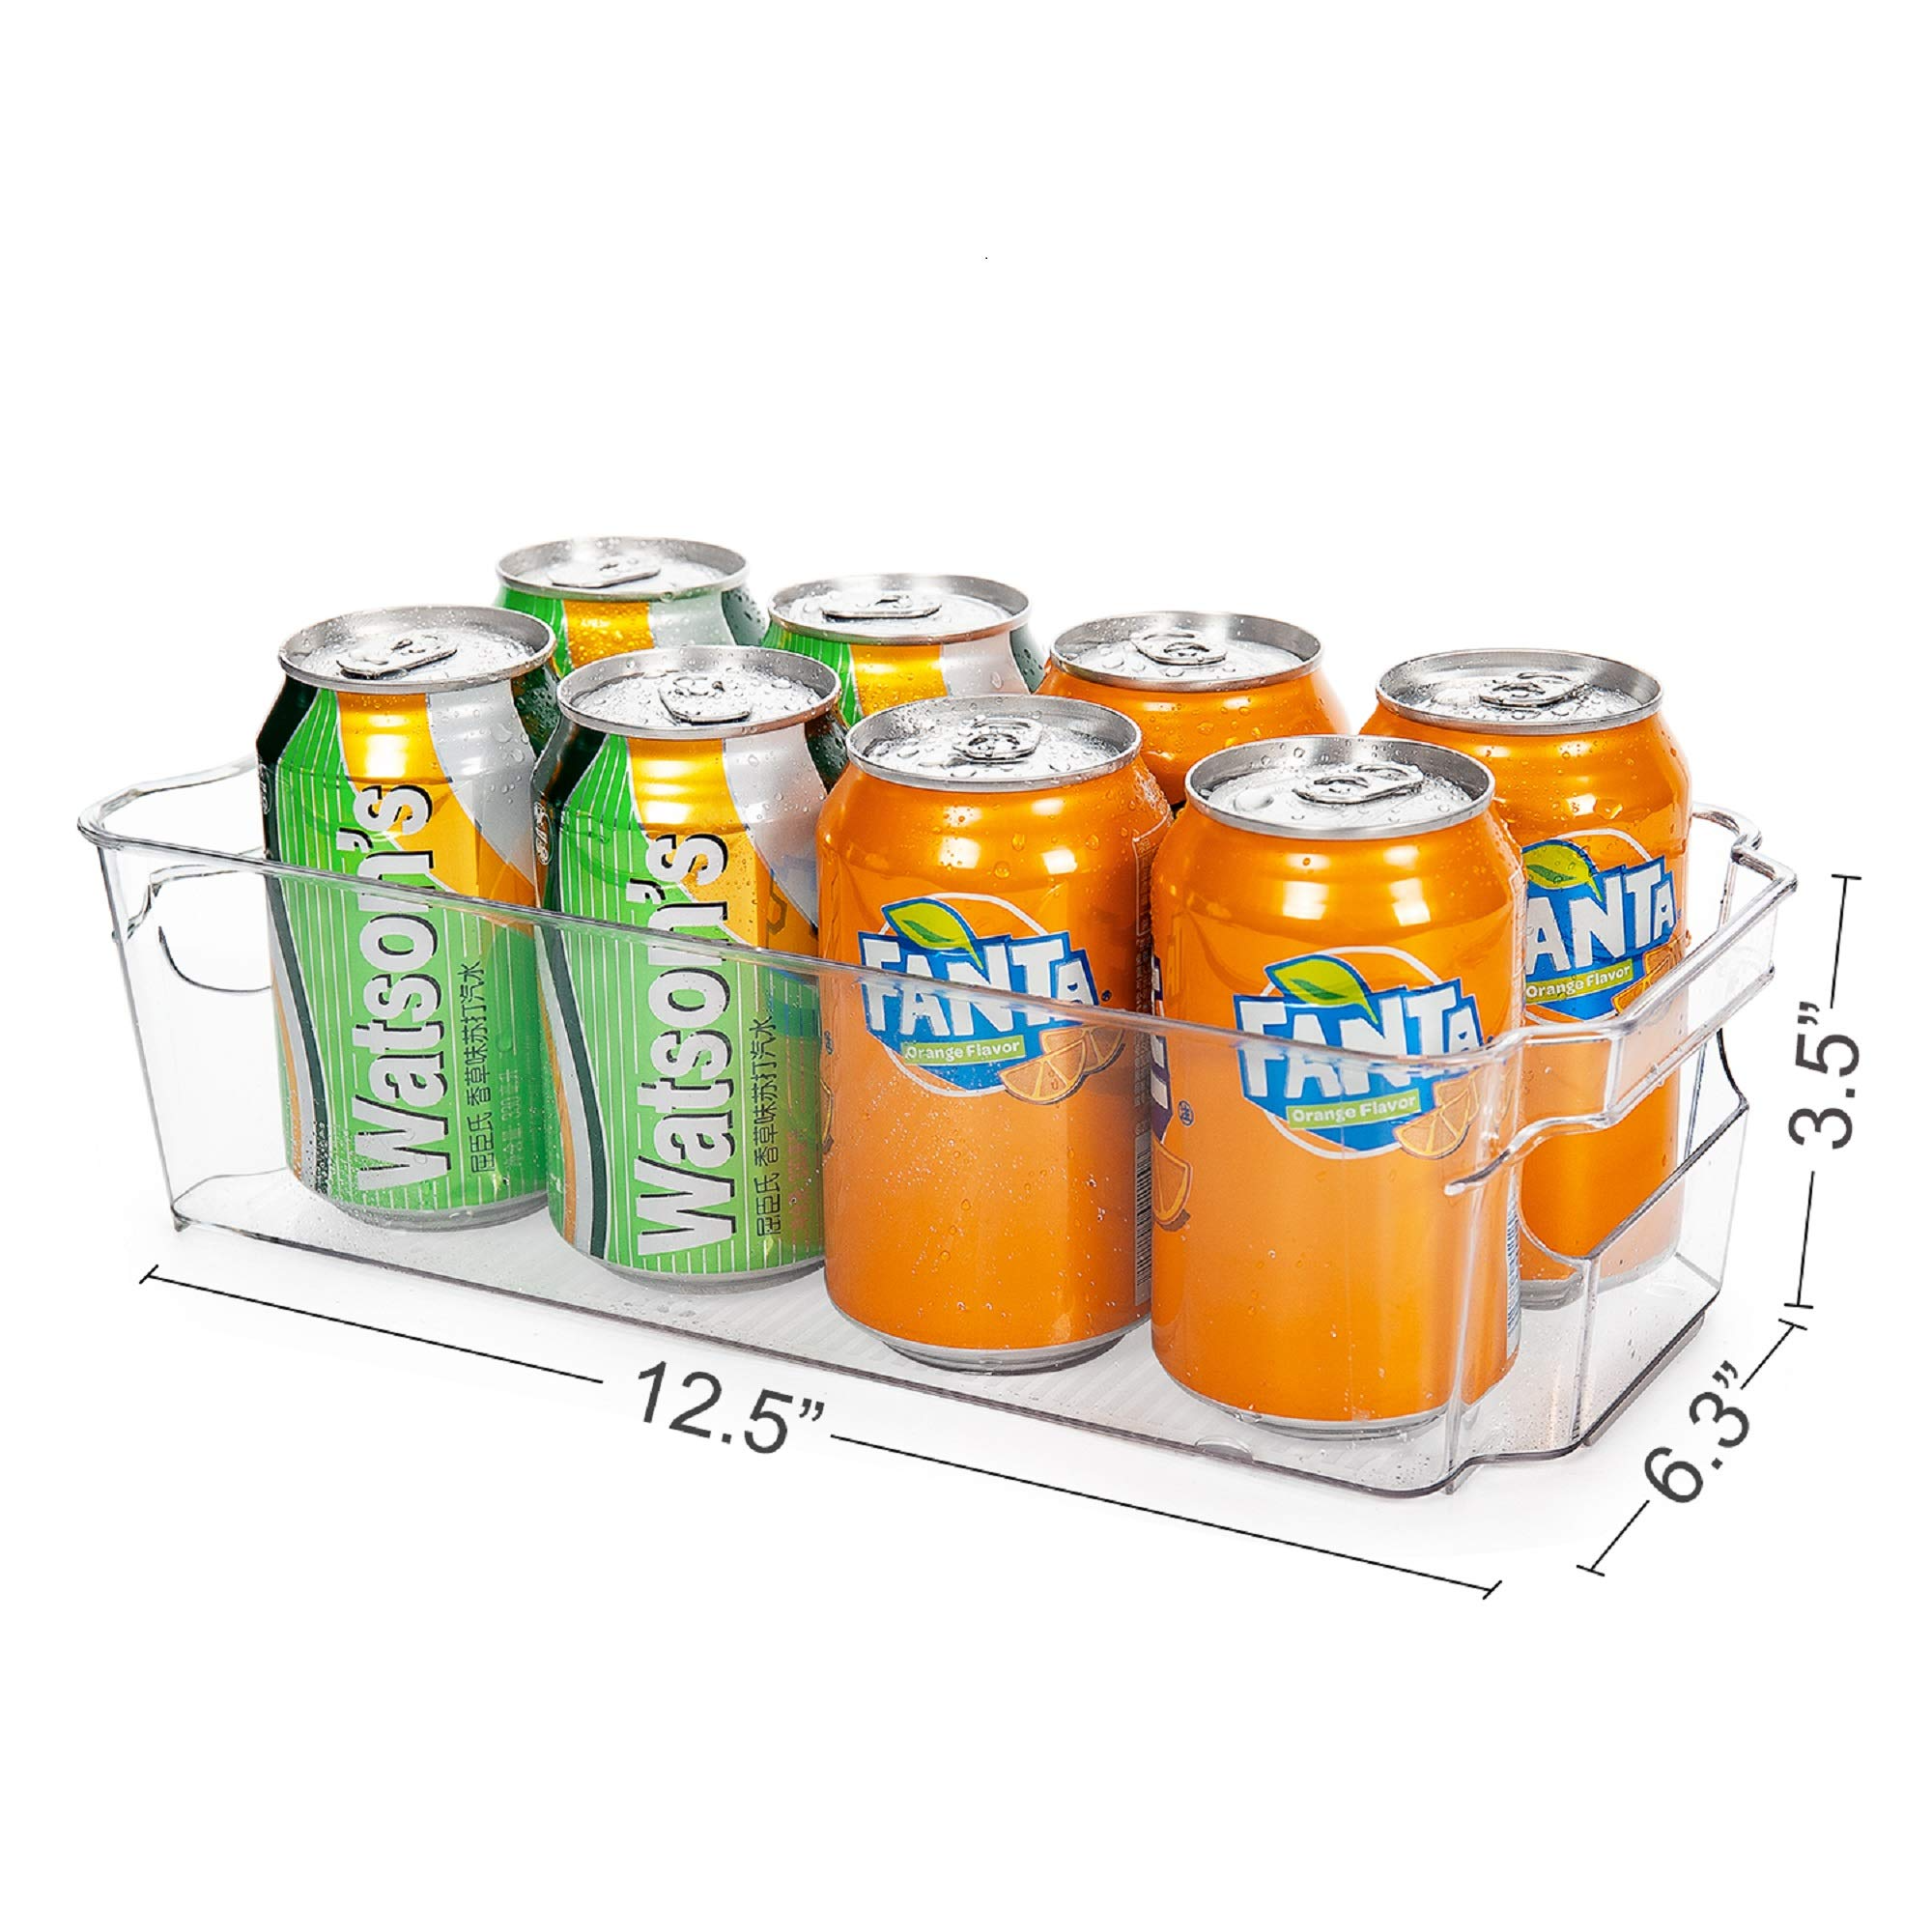 HOOJO Refrigerator Organizer Bins - 8pcs Clear Plastic Bins For Fridge,  Freezer, Kitchen Cabinet, Pantry Organization, BPA Free Fridge Organizer,  12.5 Long, Clear 